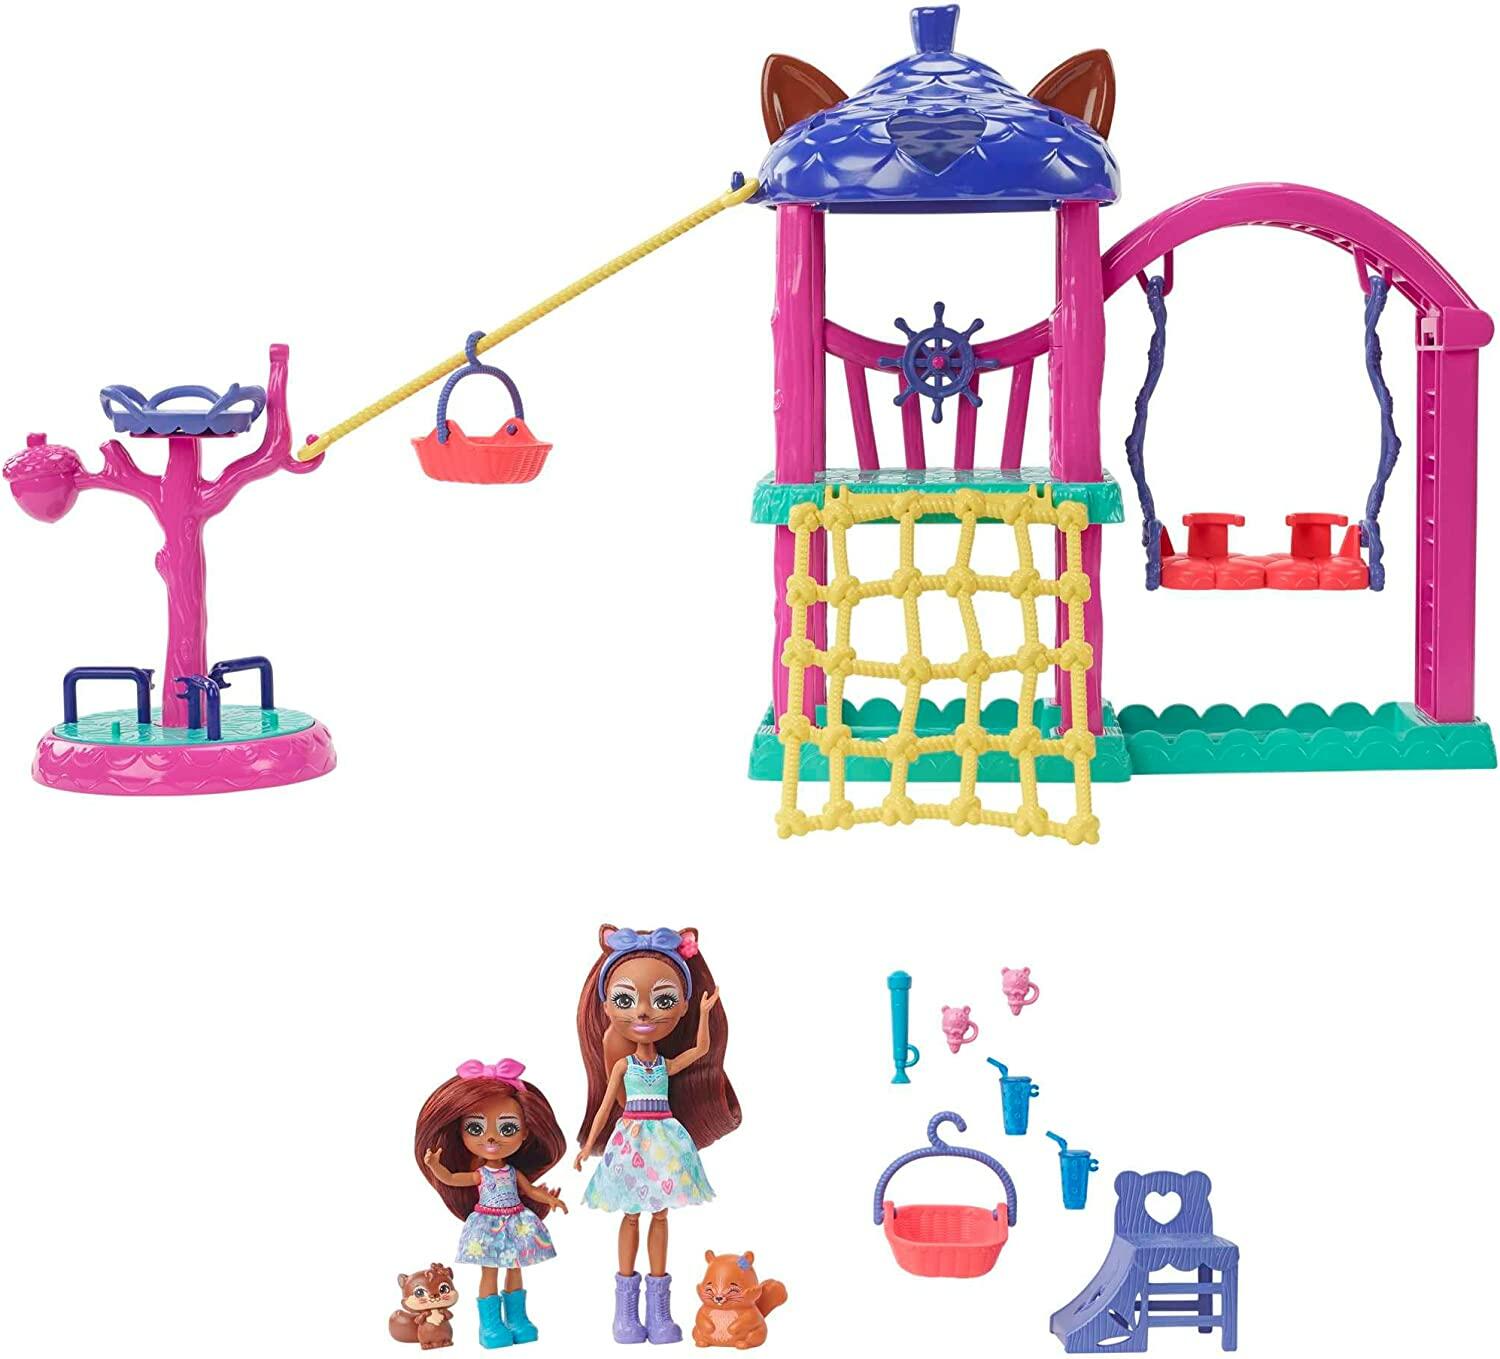 Enchantimals HHC16 City Tails Adventure Playground Playset with 2 Squirrel Dolls